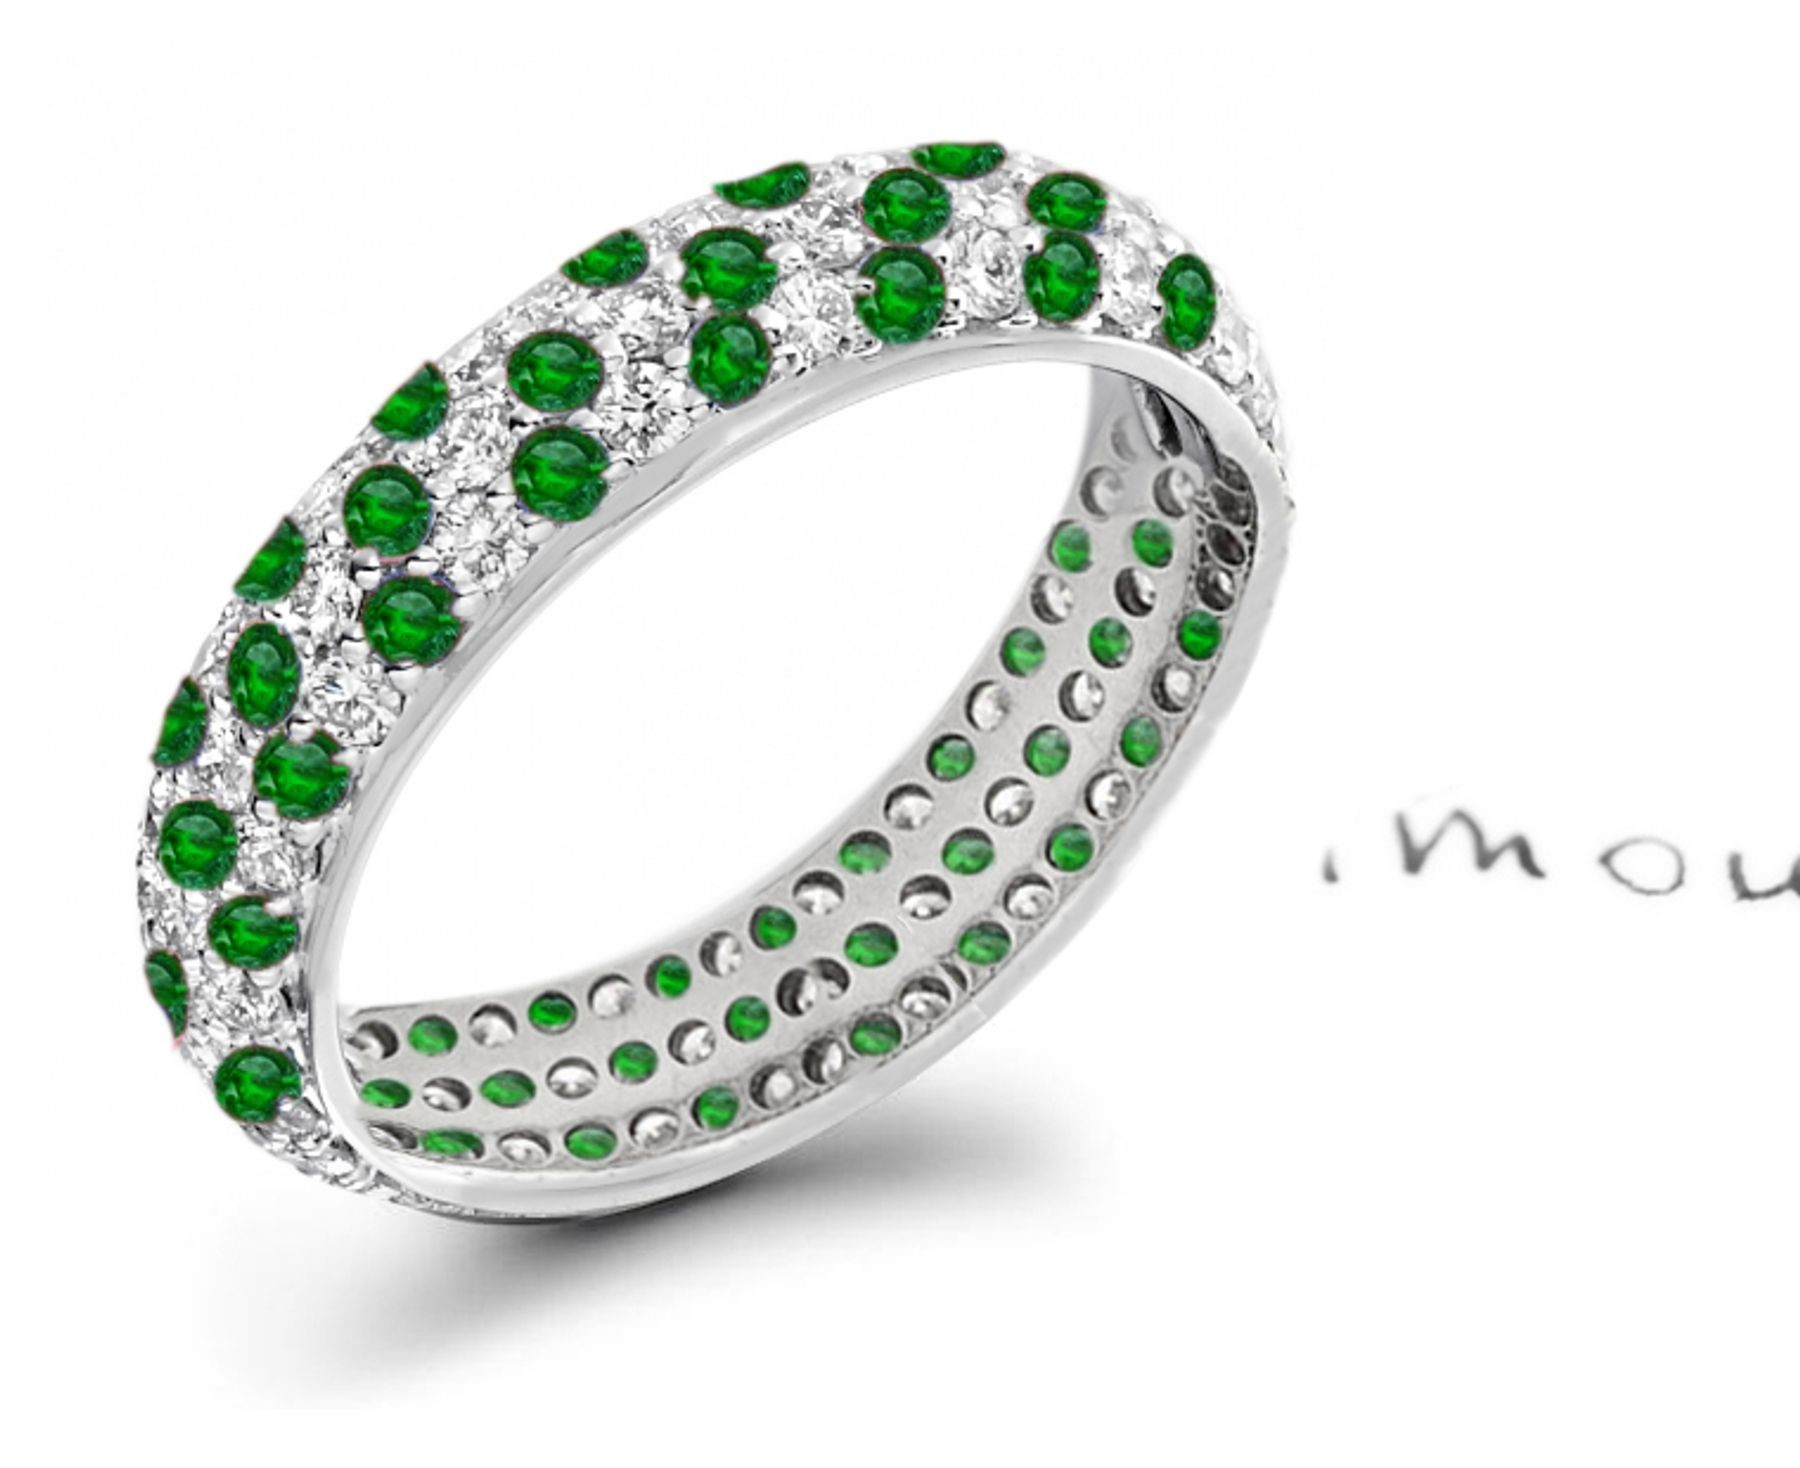 "Strikingly Elegant Styles": Pave Set Emerald & Diamond Eternity Band with A Green Most Beautiful, Shining